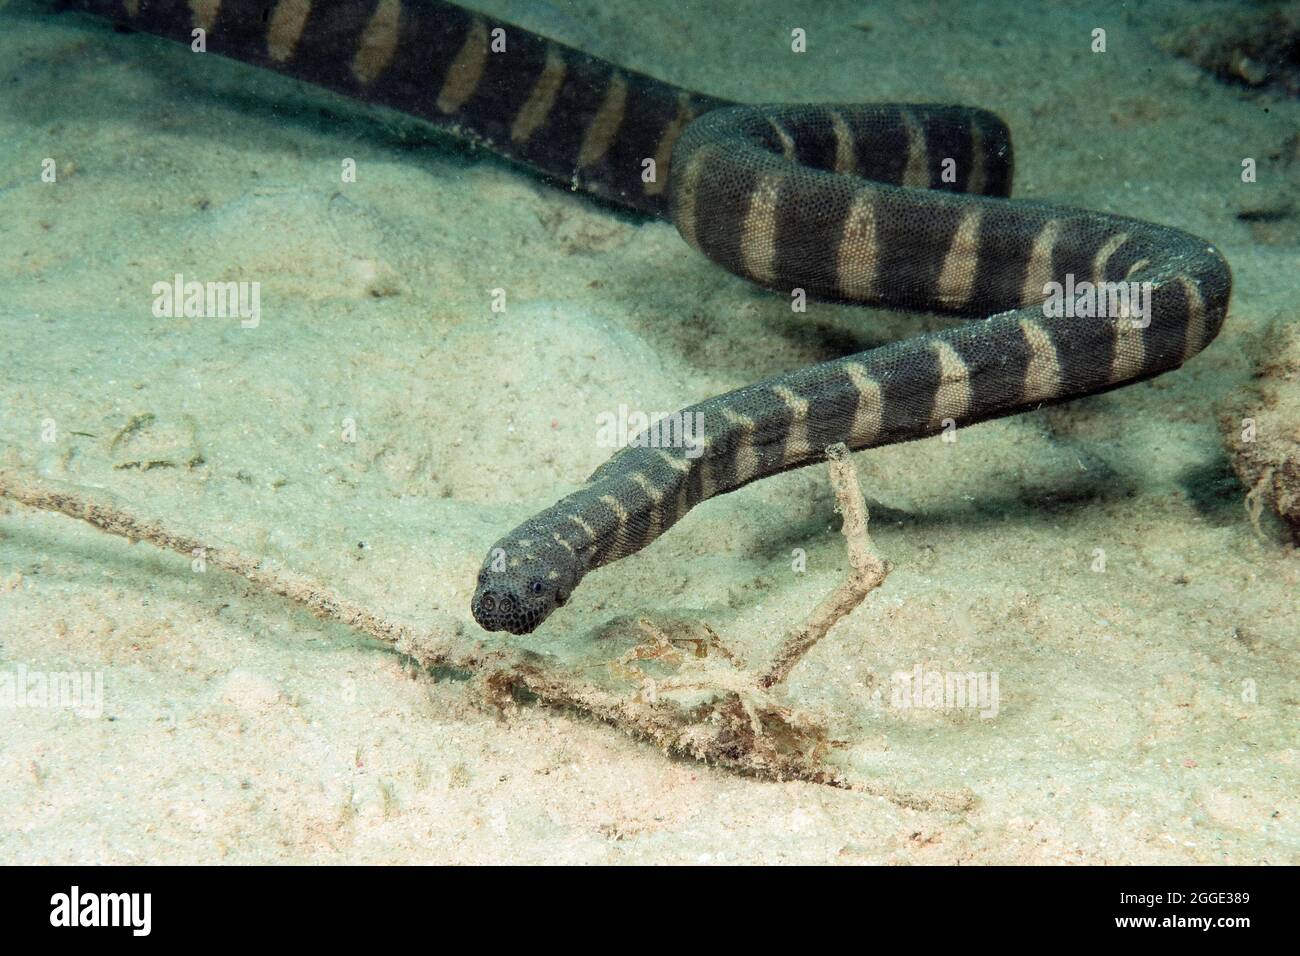 Indian warty snake (Acrochordus granulatus), non-venomous sea snake, Philippine Sea, Indian Ocean, Philippines Stock Photo